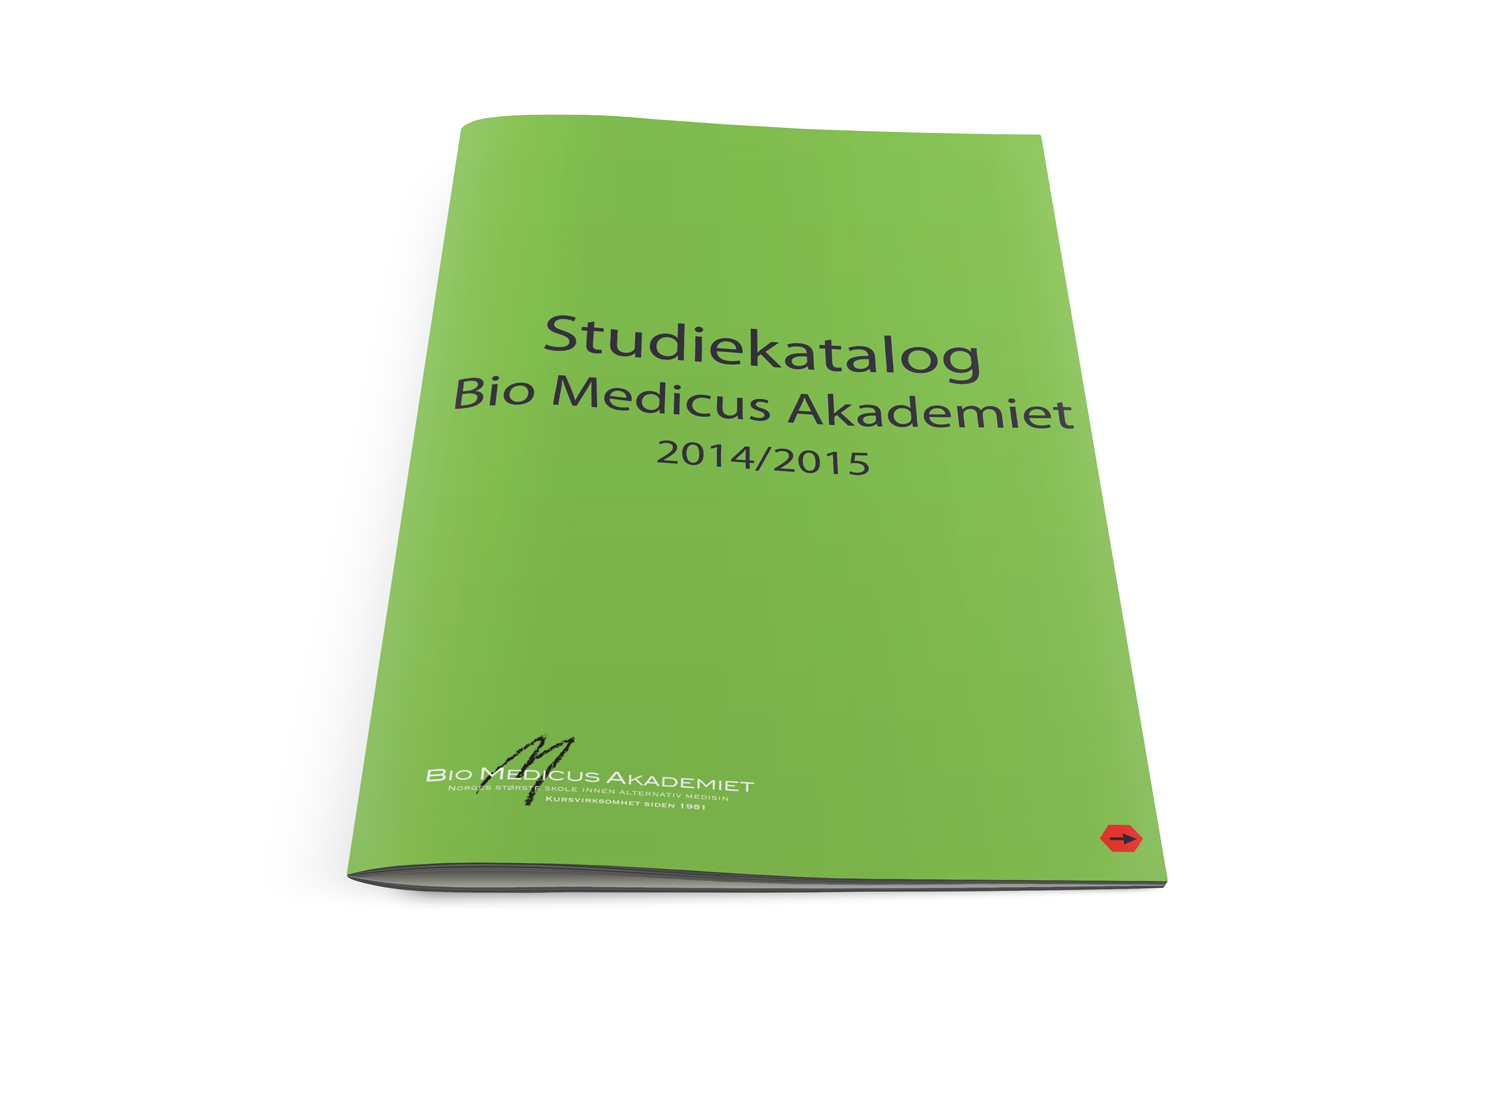 Studiekatalog-brosjyre-flyer-folder-bio-medicus-akademiet-grafisk-design-profilering.jpg